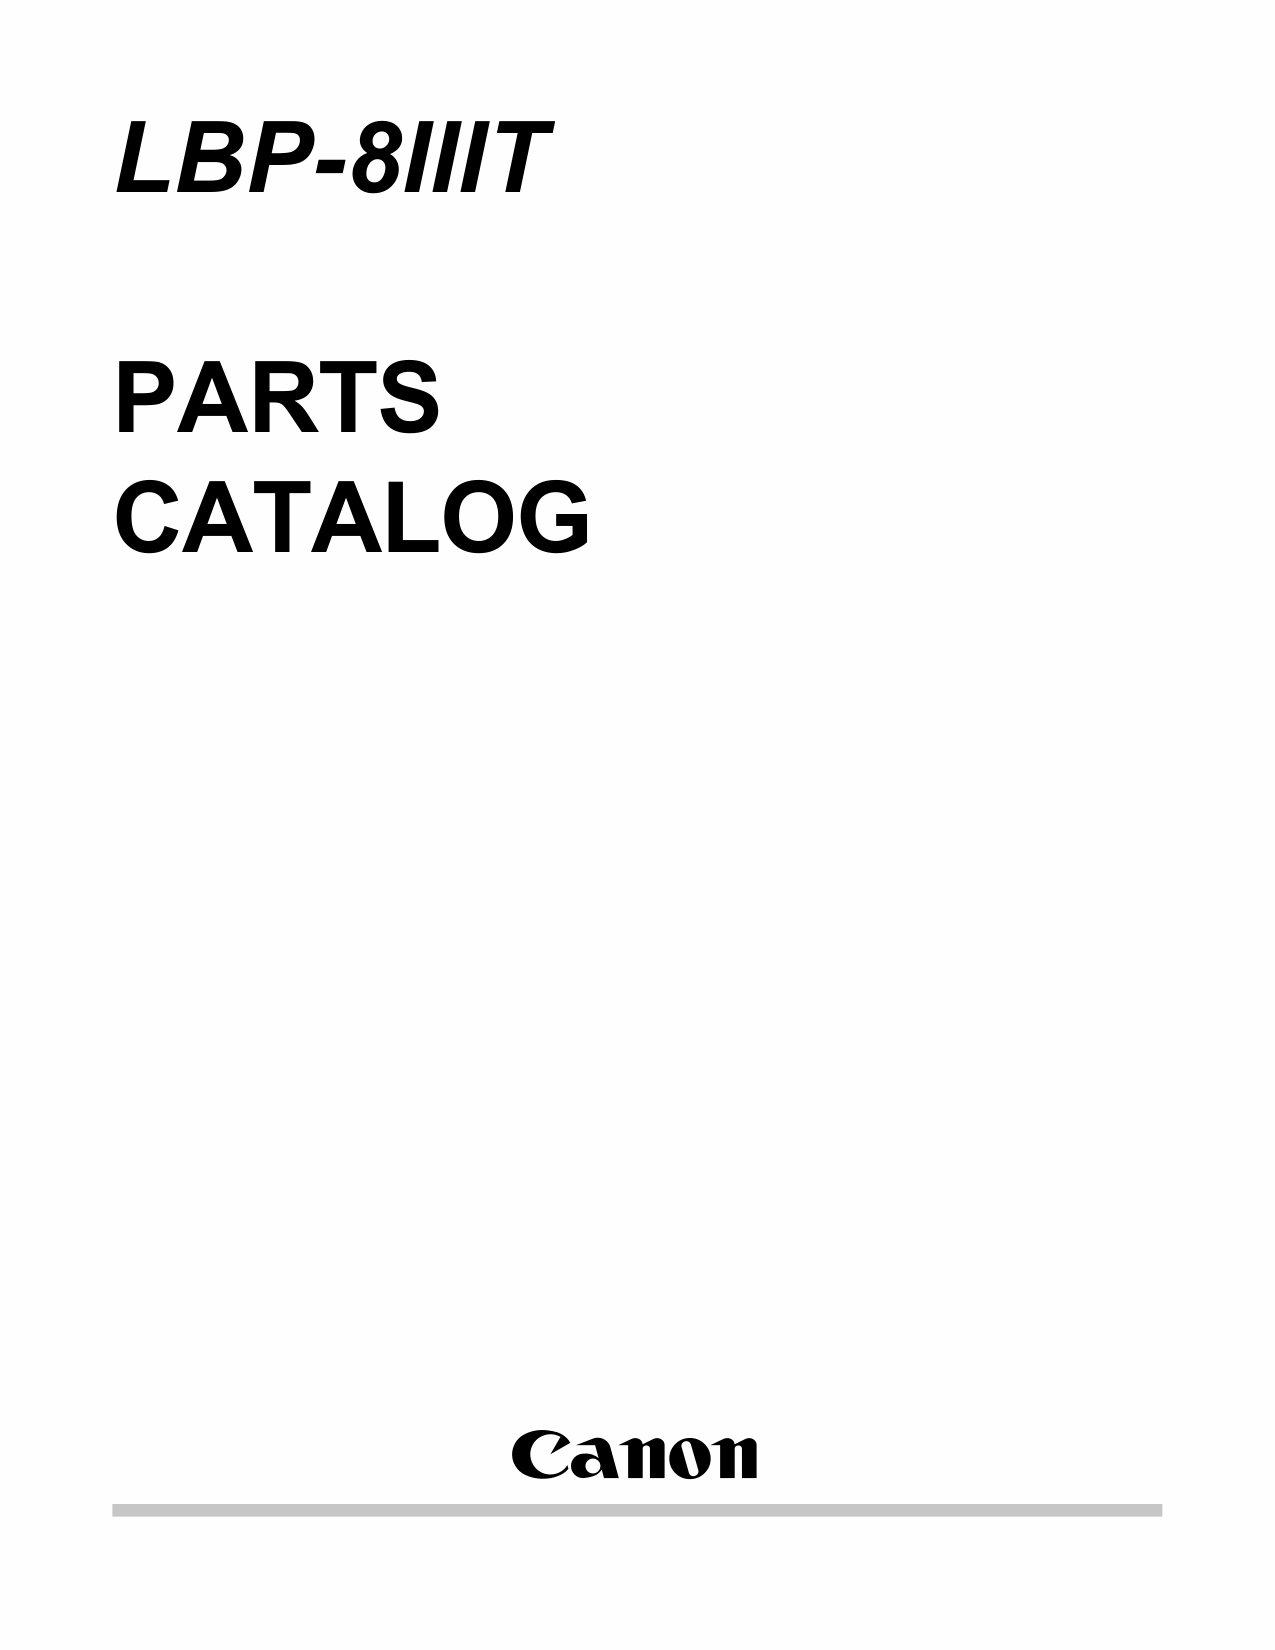 Canon imageCLASS LBP-8IIIT Parts Catalog Manual-1